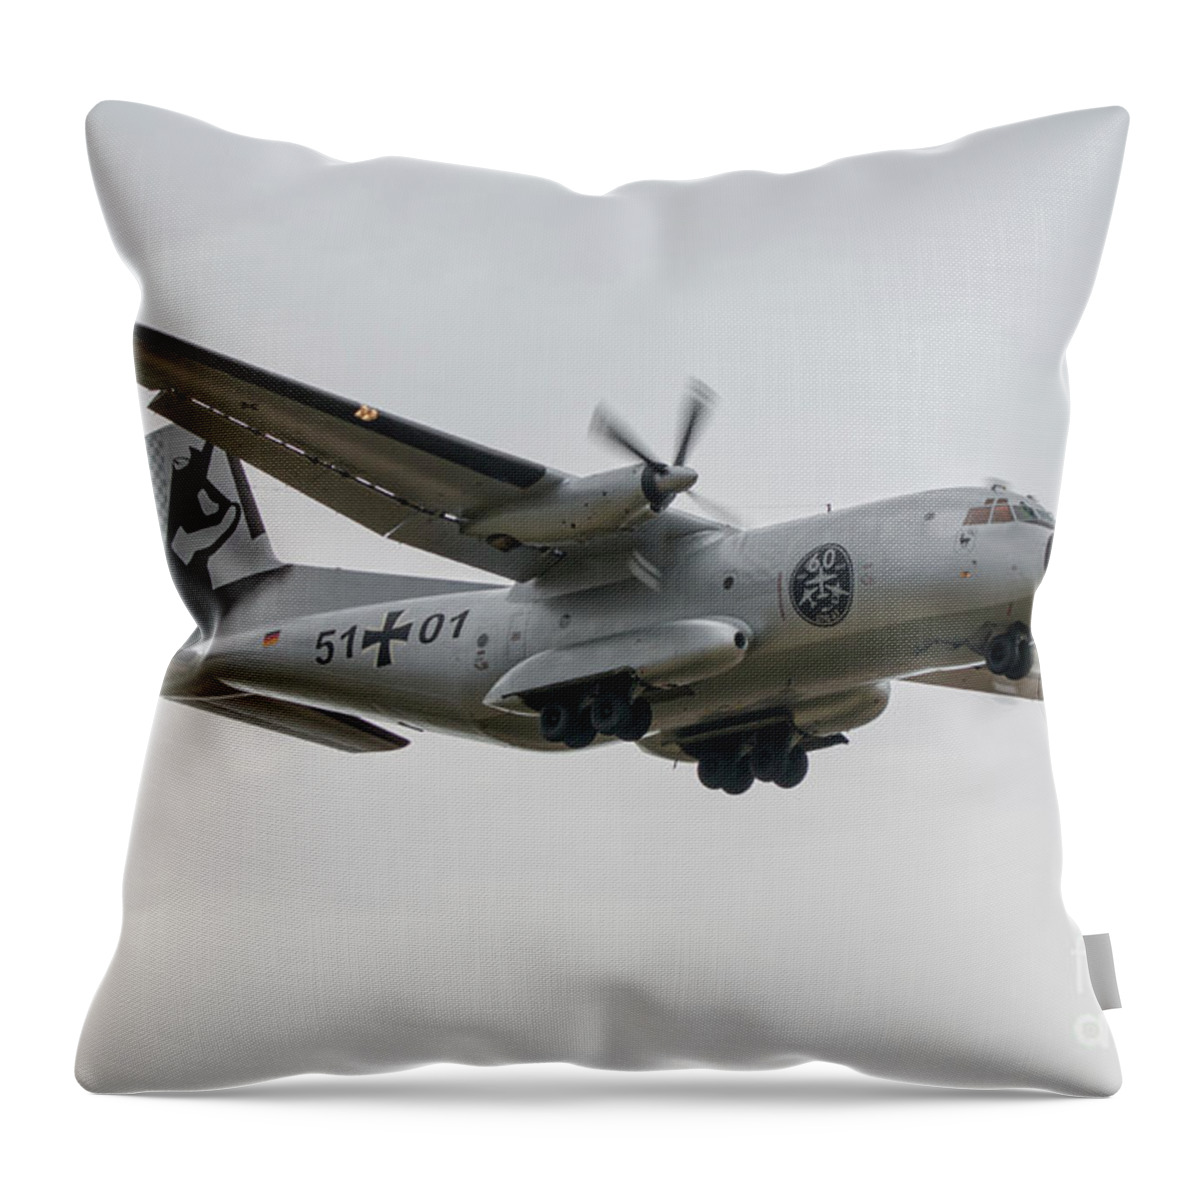 C160 Throw Pillow featuring the digital art C-160 Transall by Airpower Art